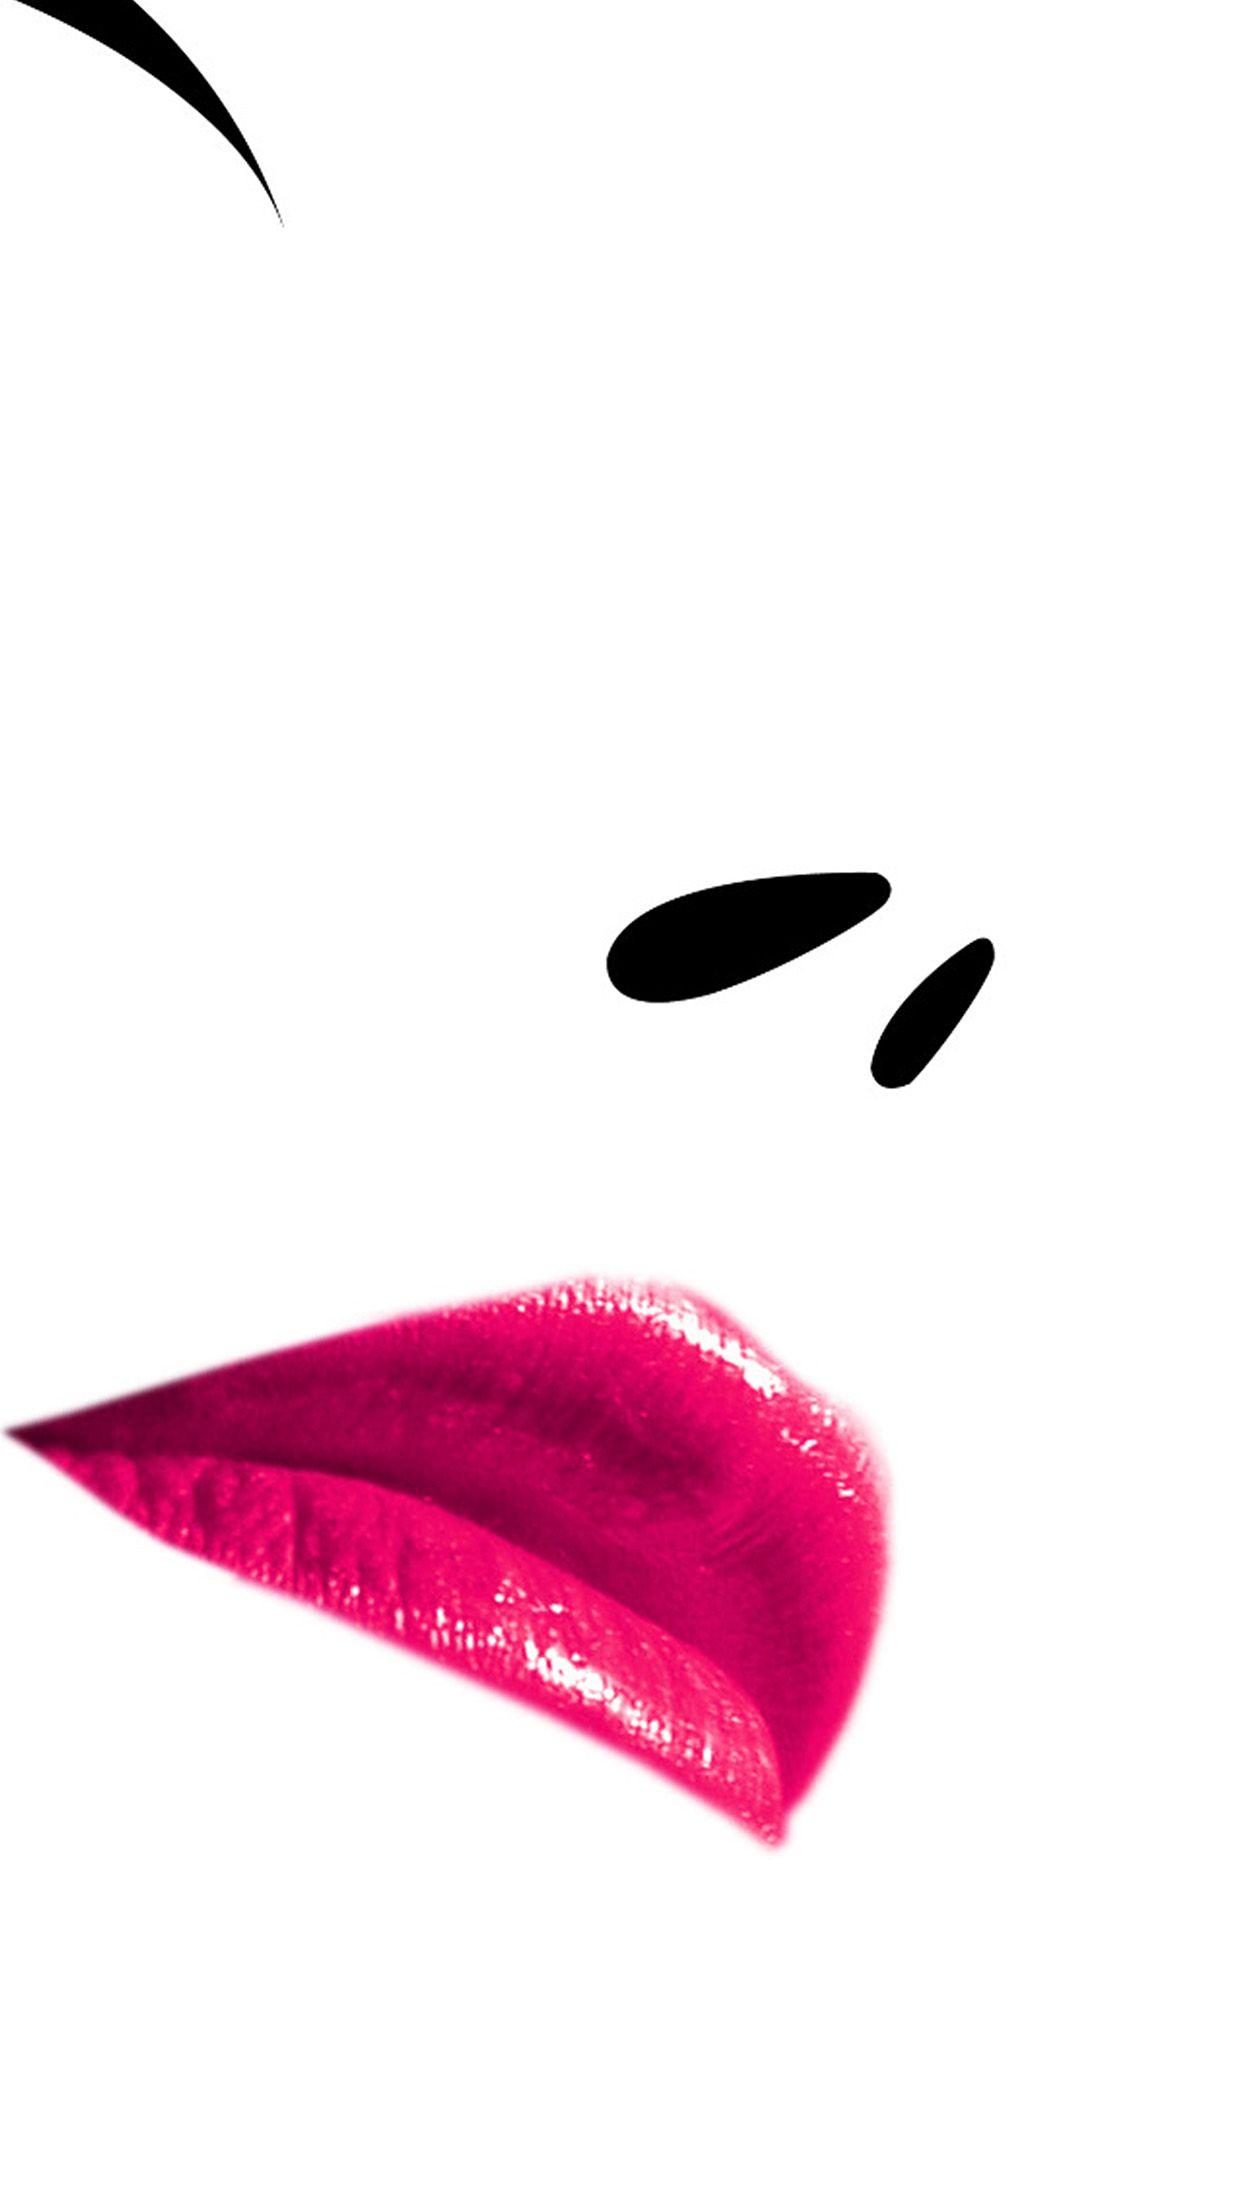 iPhone7 wallpaper. lips minimal white face